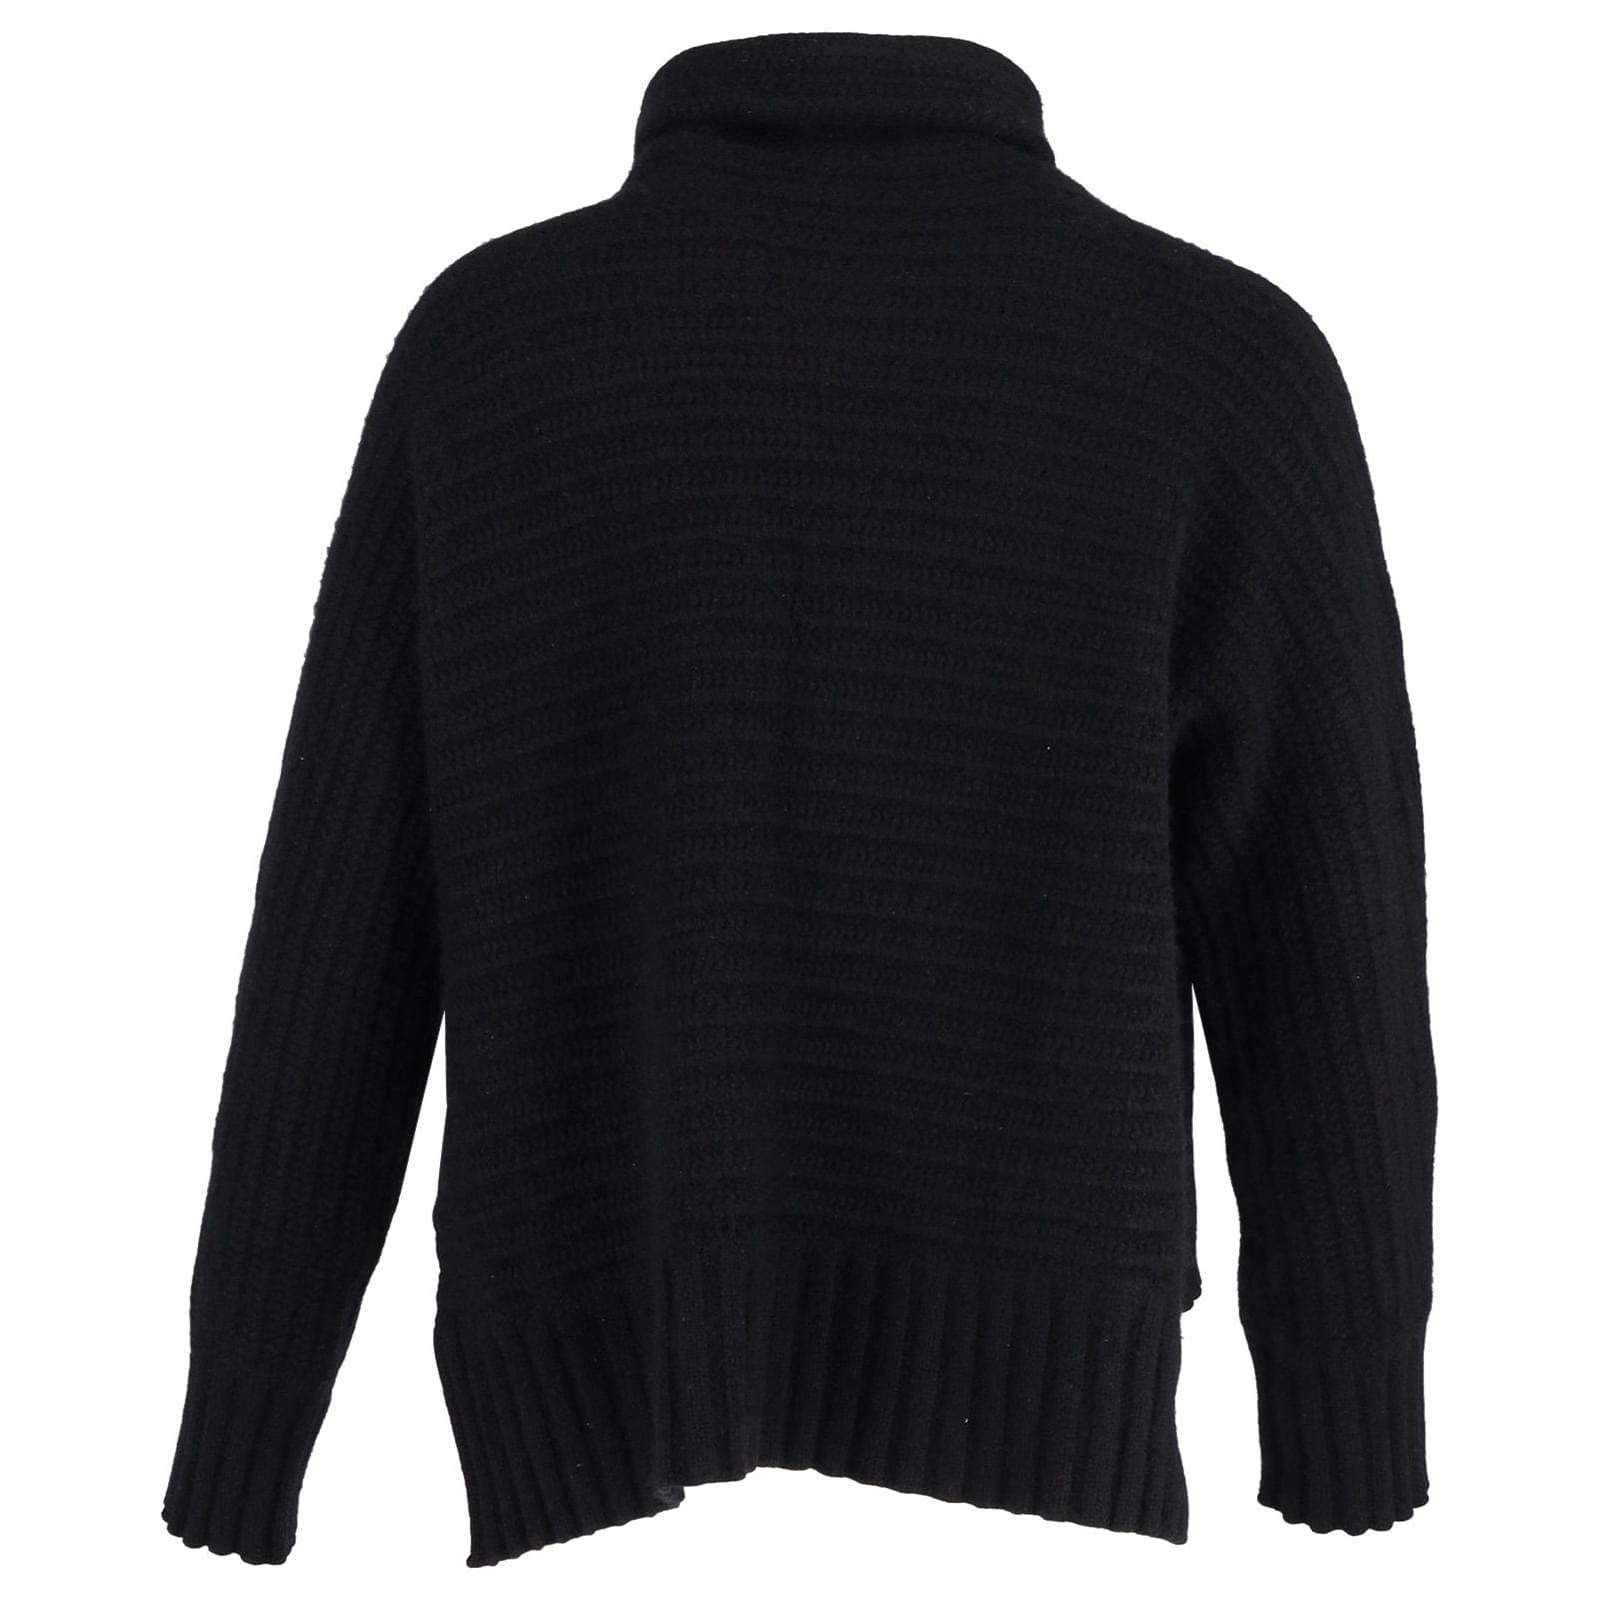 Zadig & Voltaire Turtleneck Sweater in Black Cashmere Wool ref ...